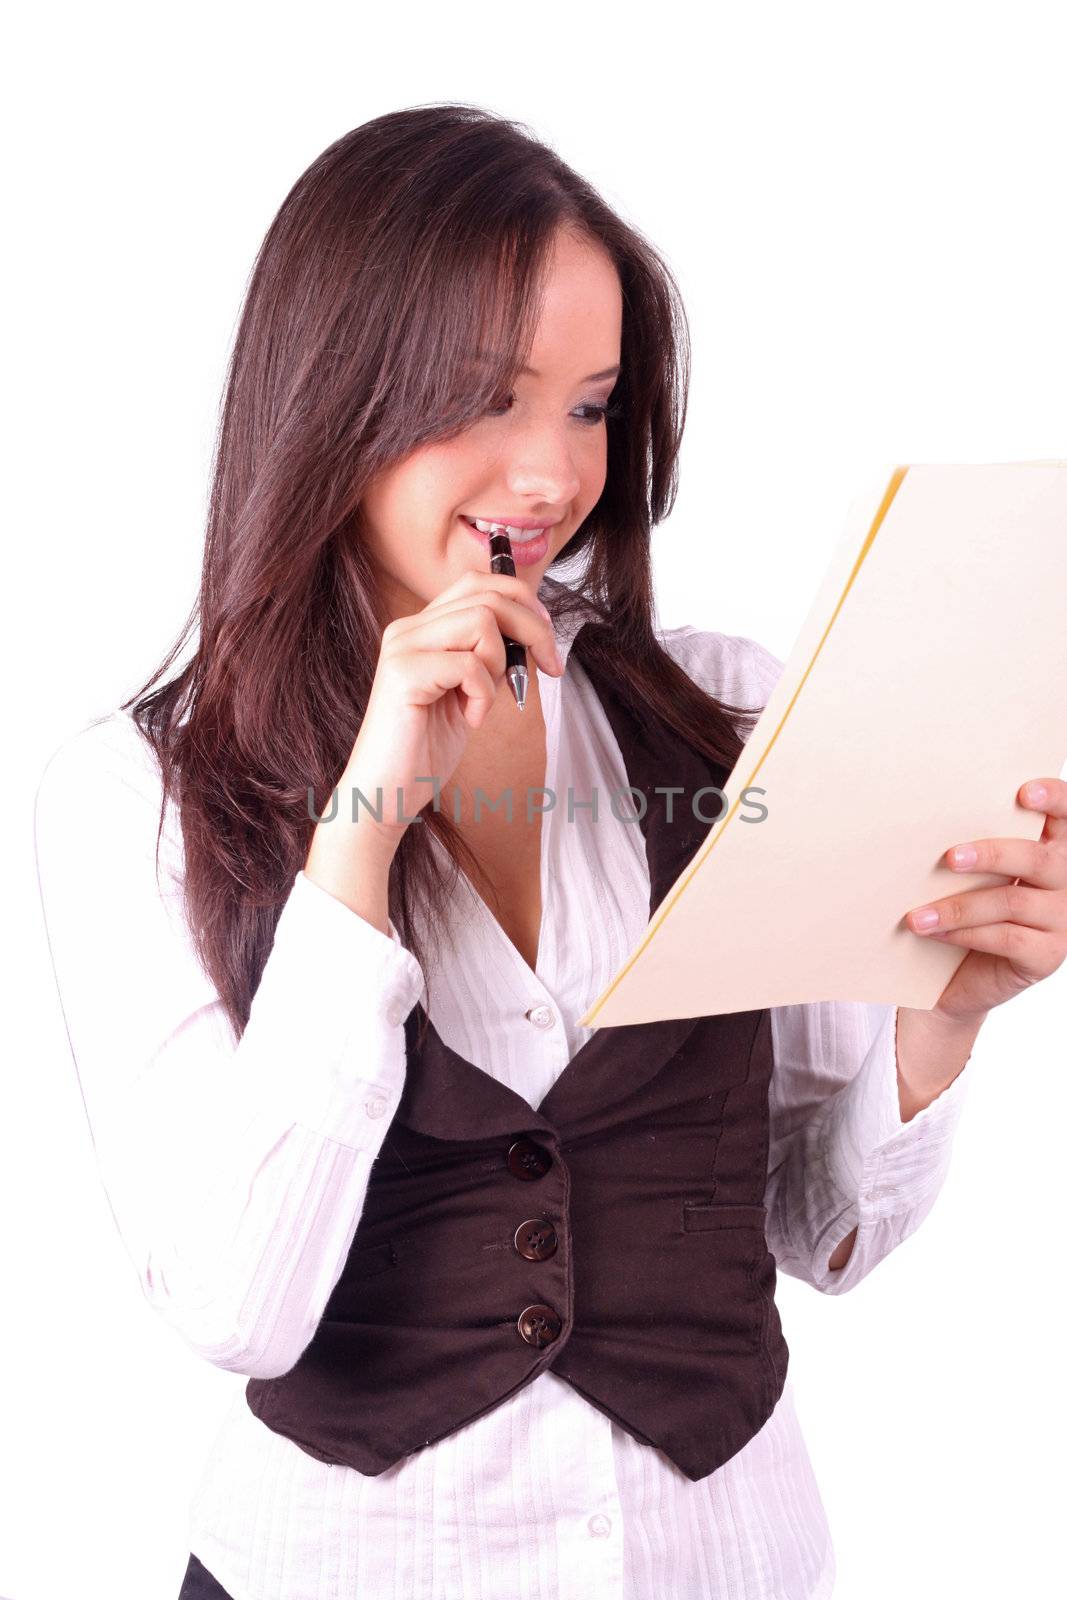 Sexy business woman holding file folder, full length portrait is by dacasdo